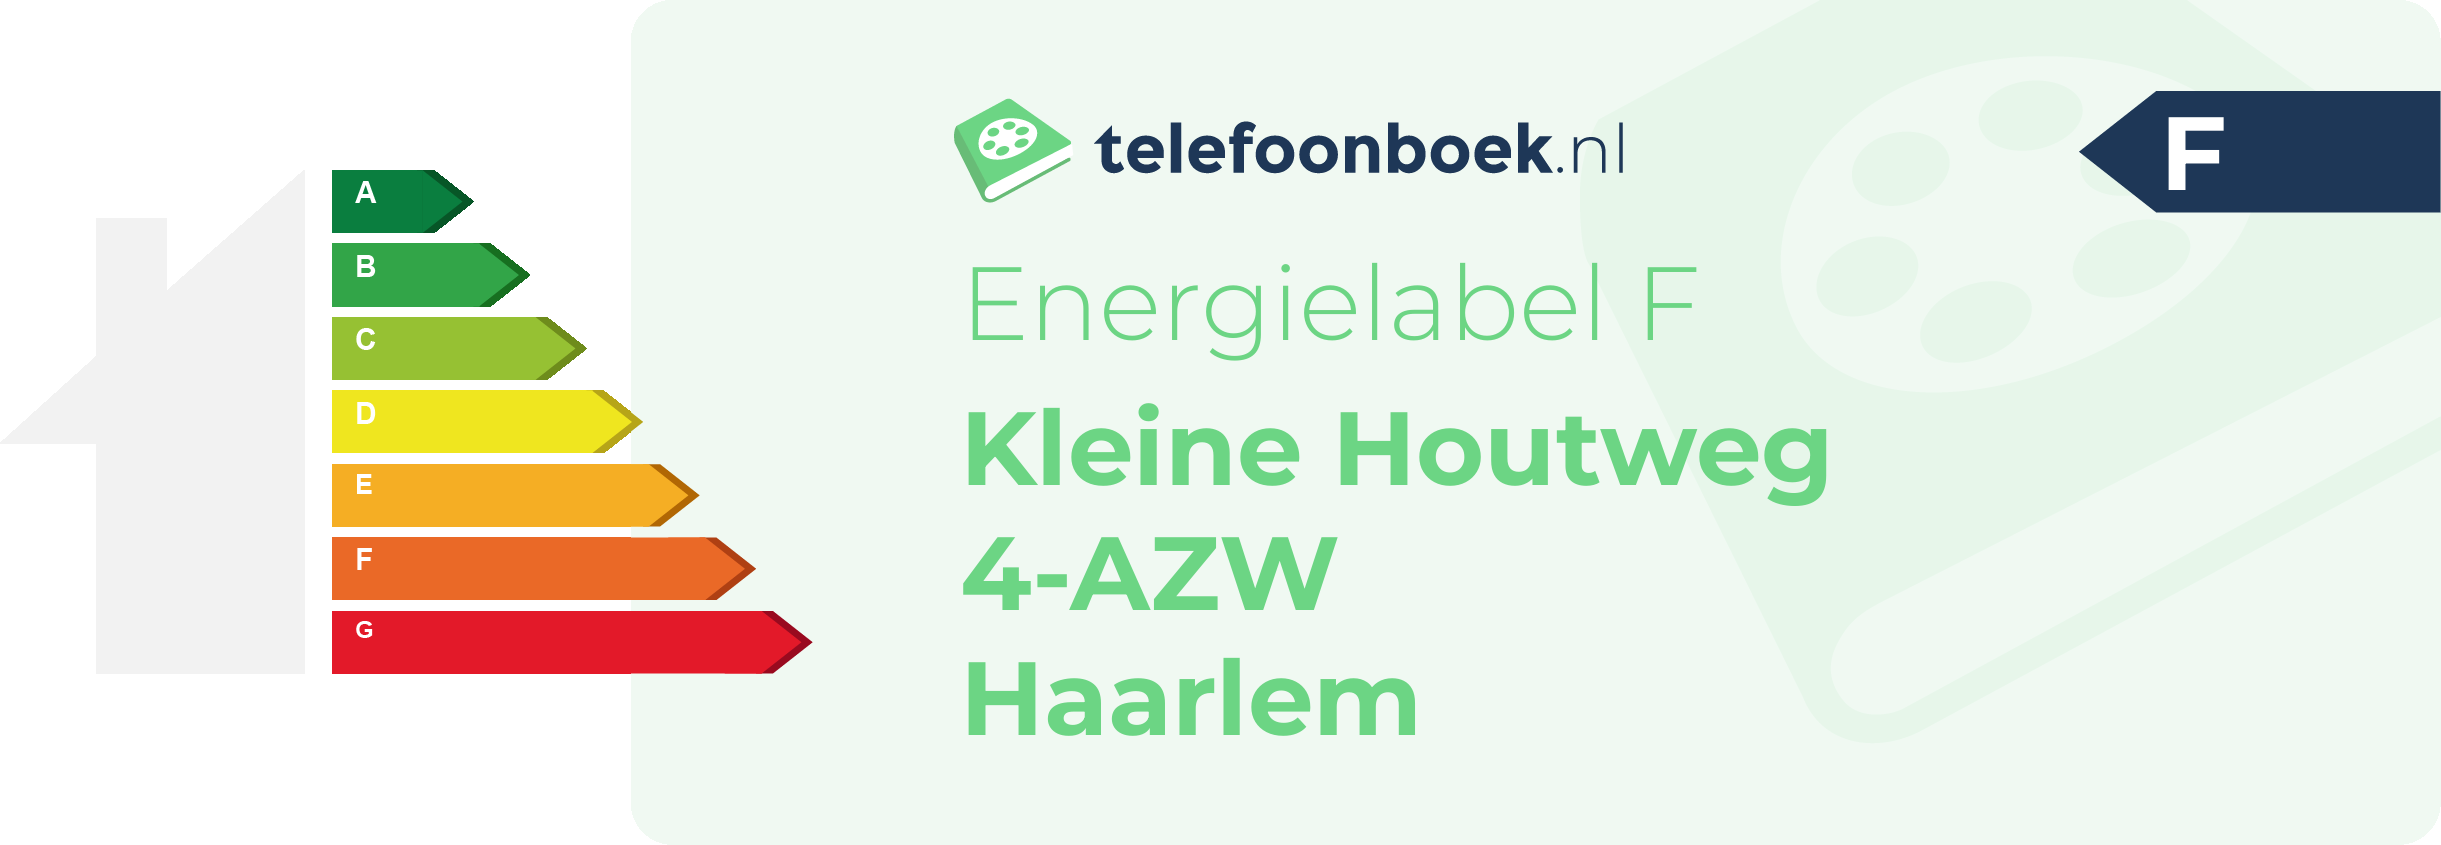 Energielabel Kleine Houtweg 4-AZW Haarlem